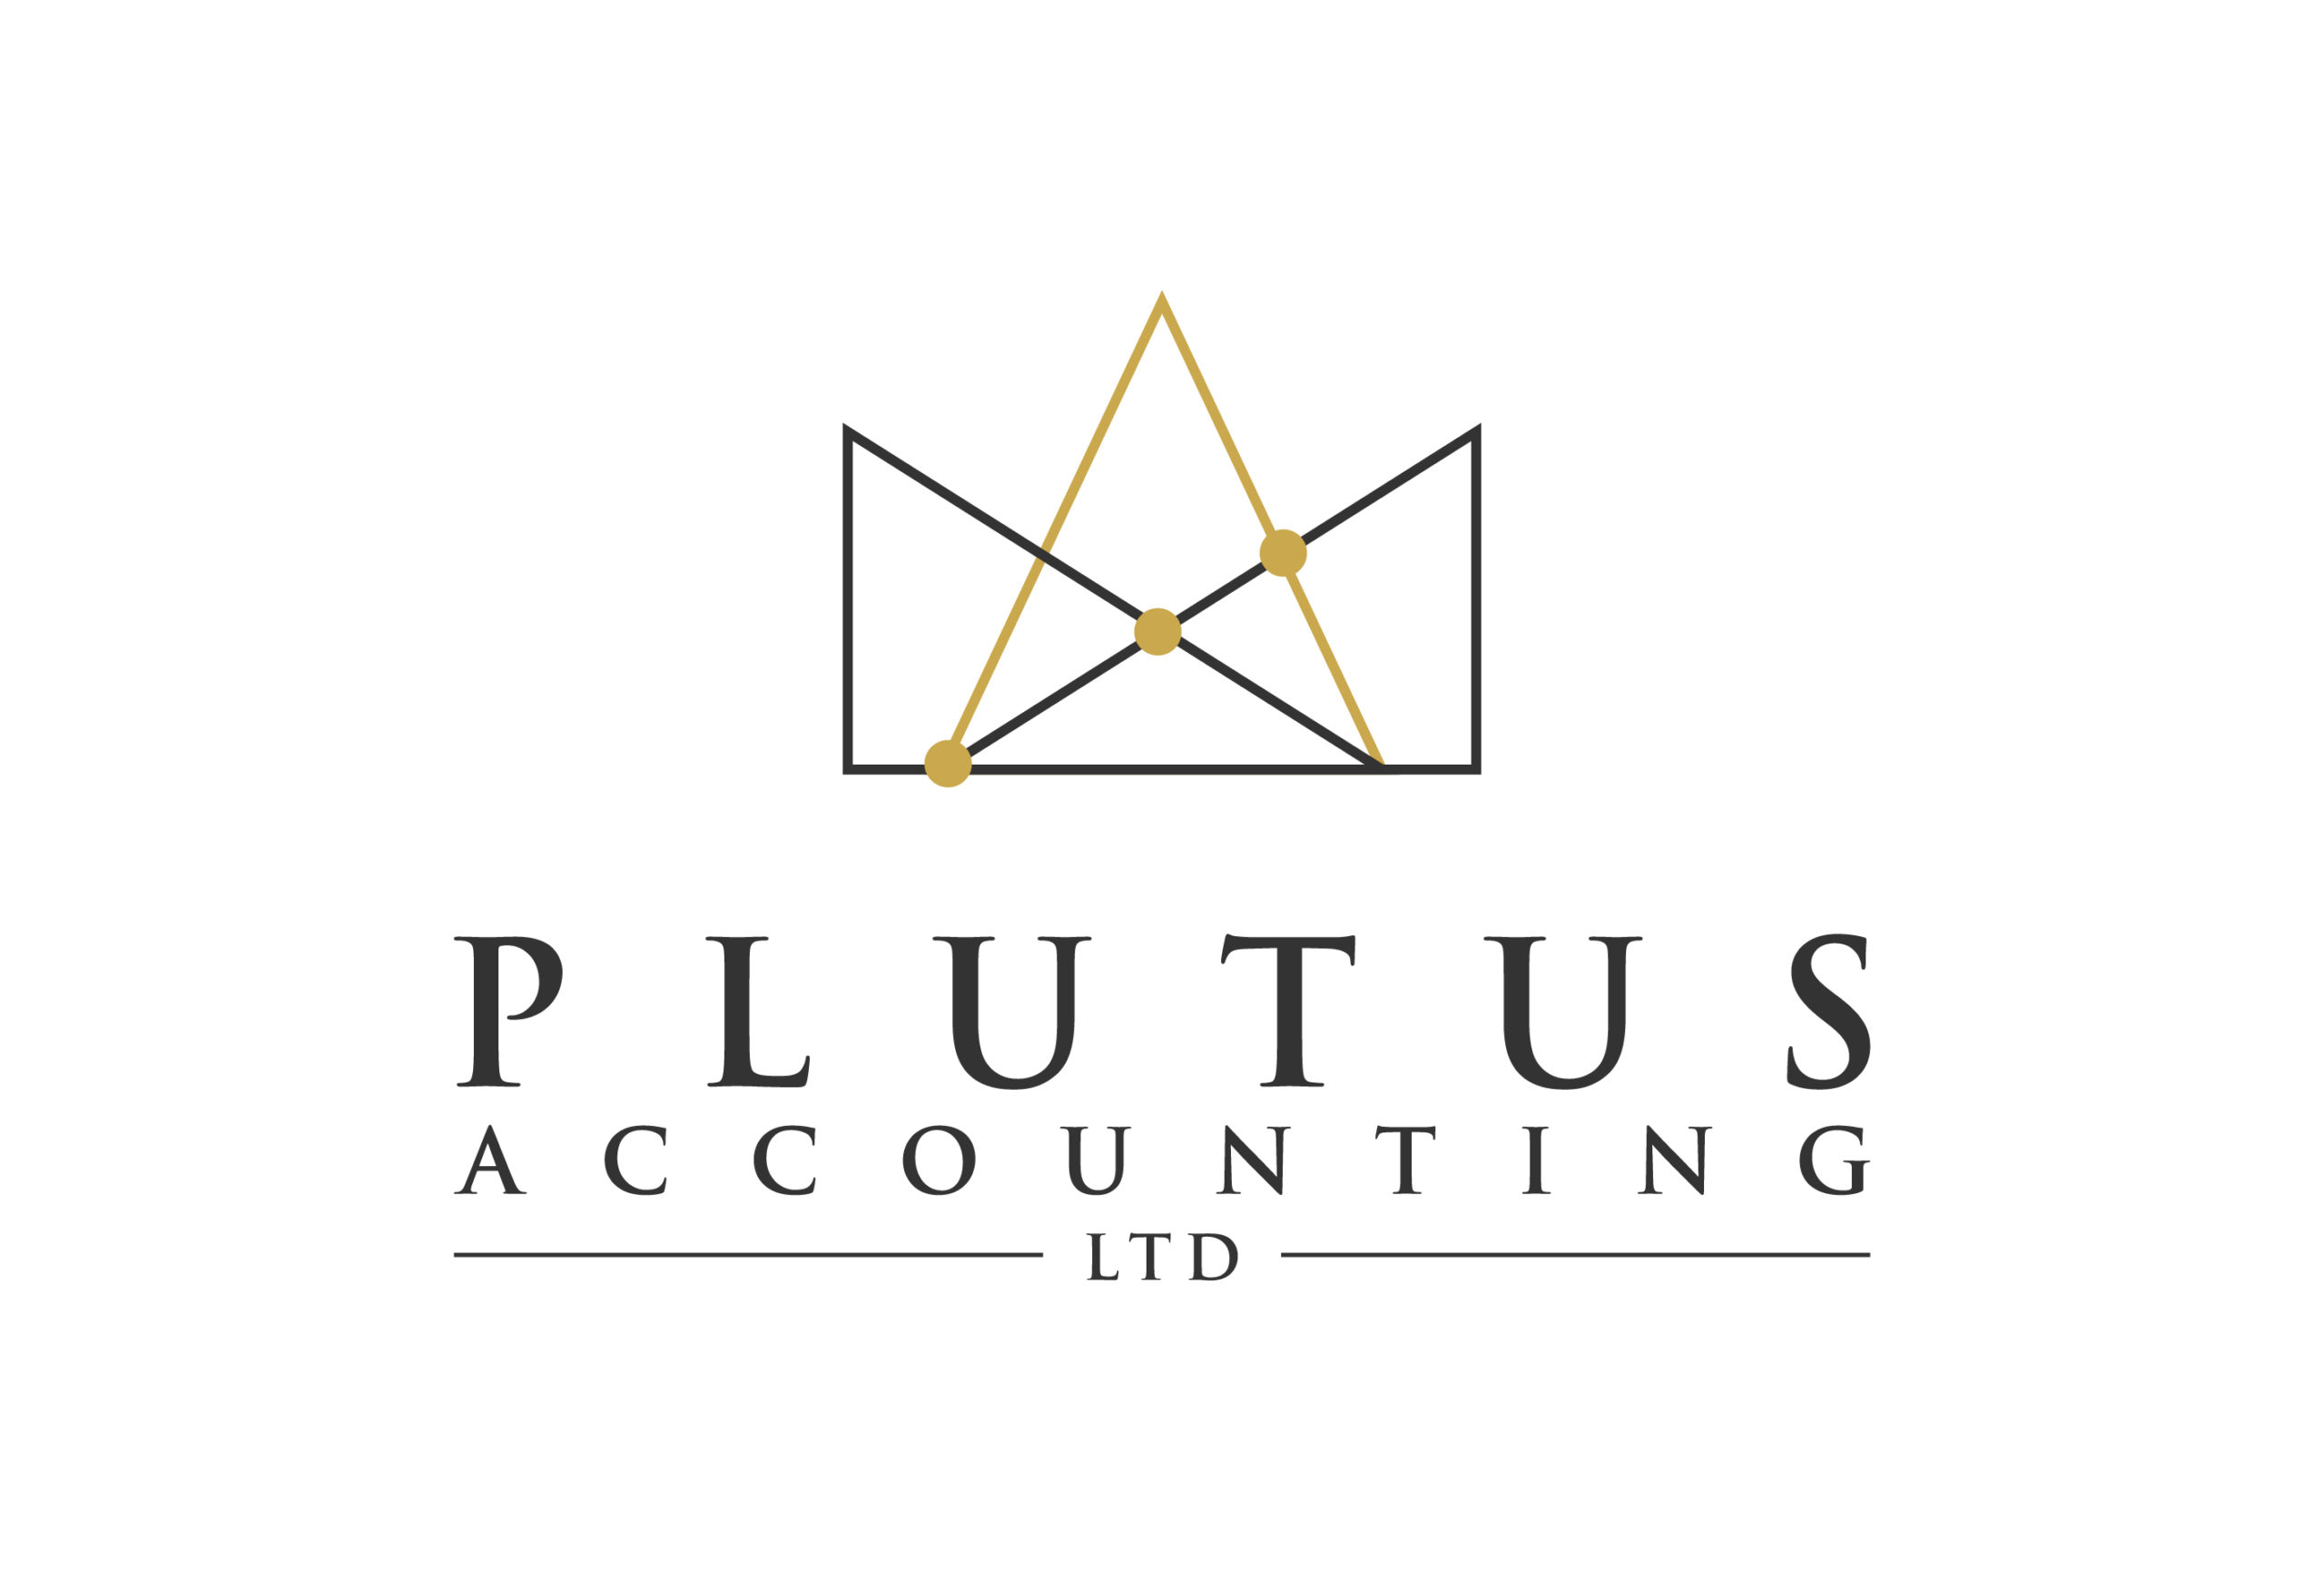 Plutus Accounting Ltd logo